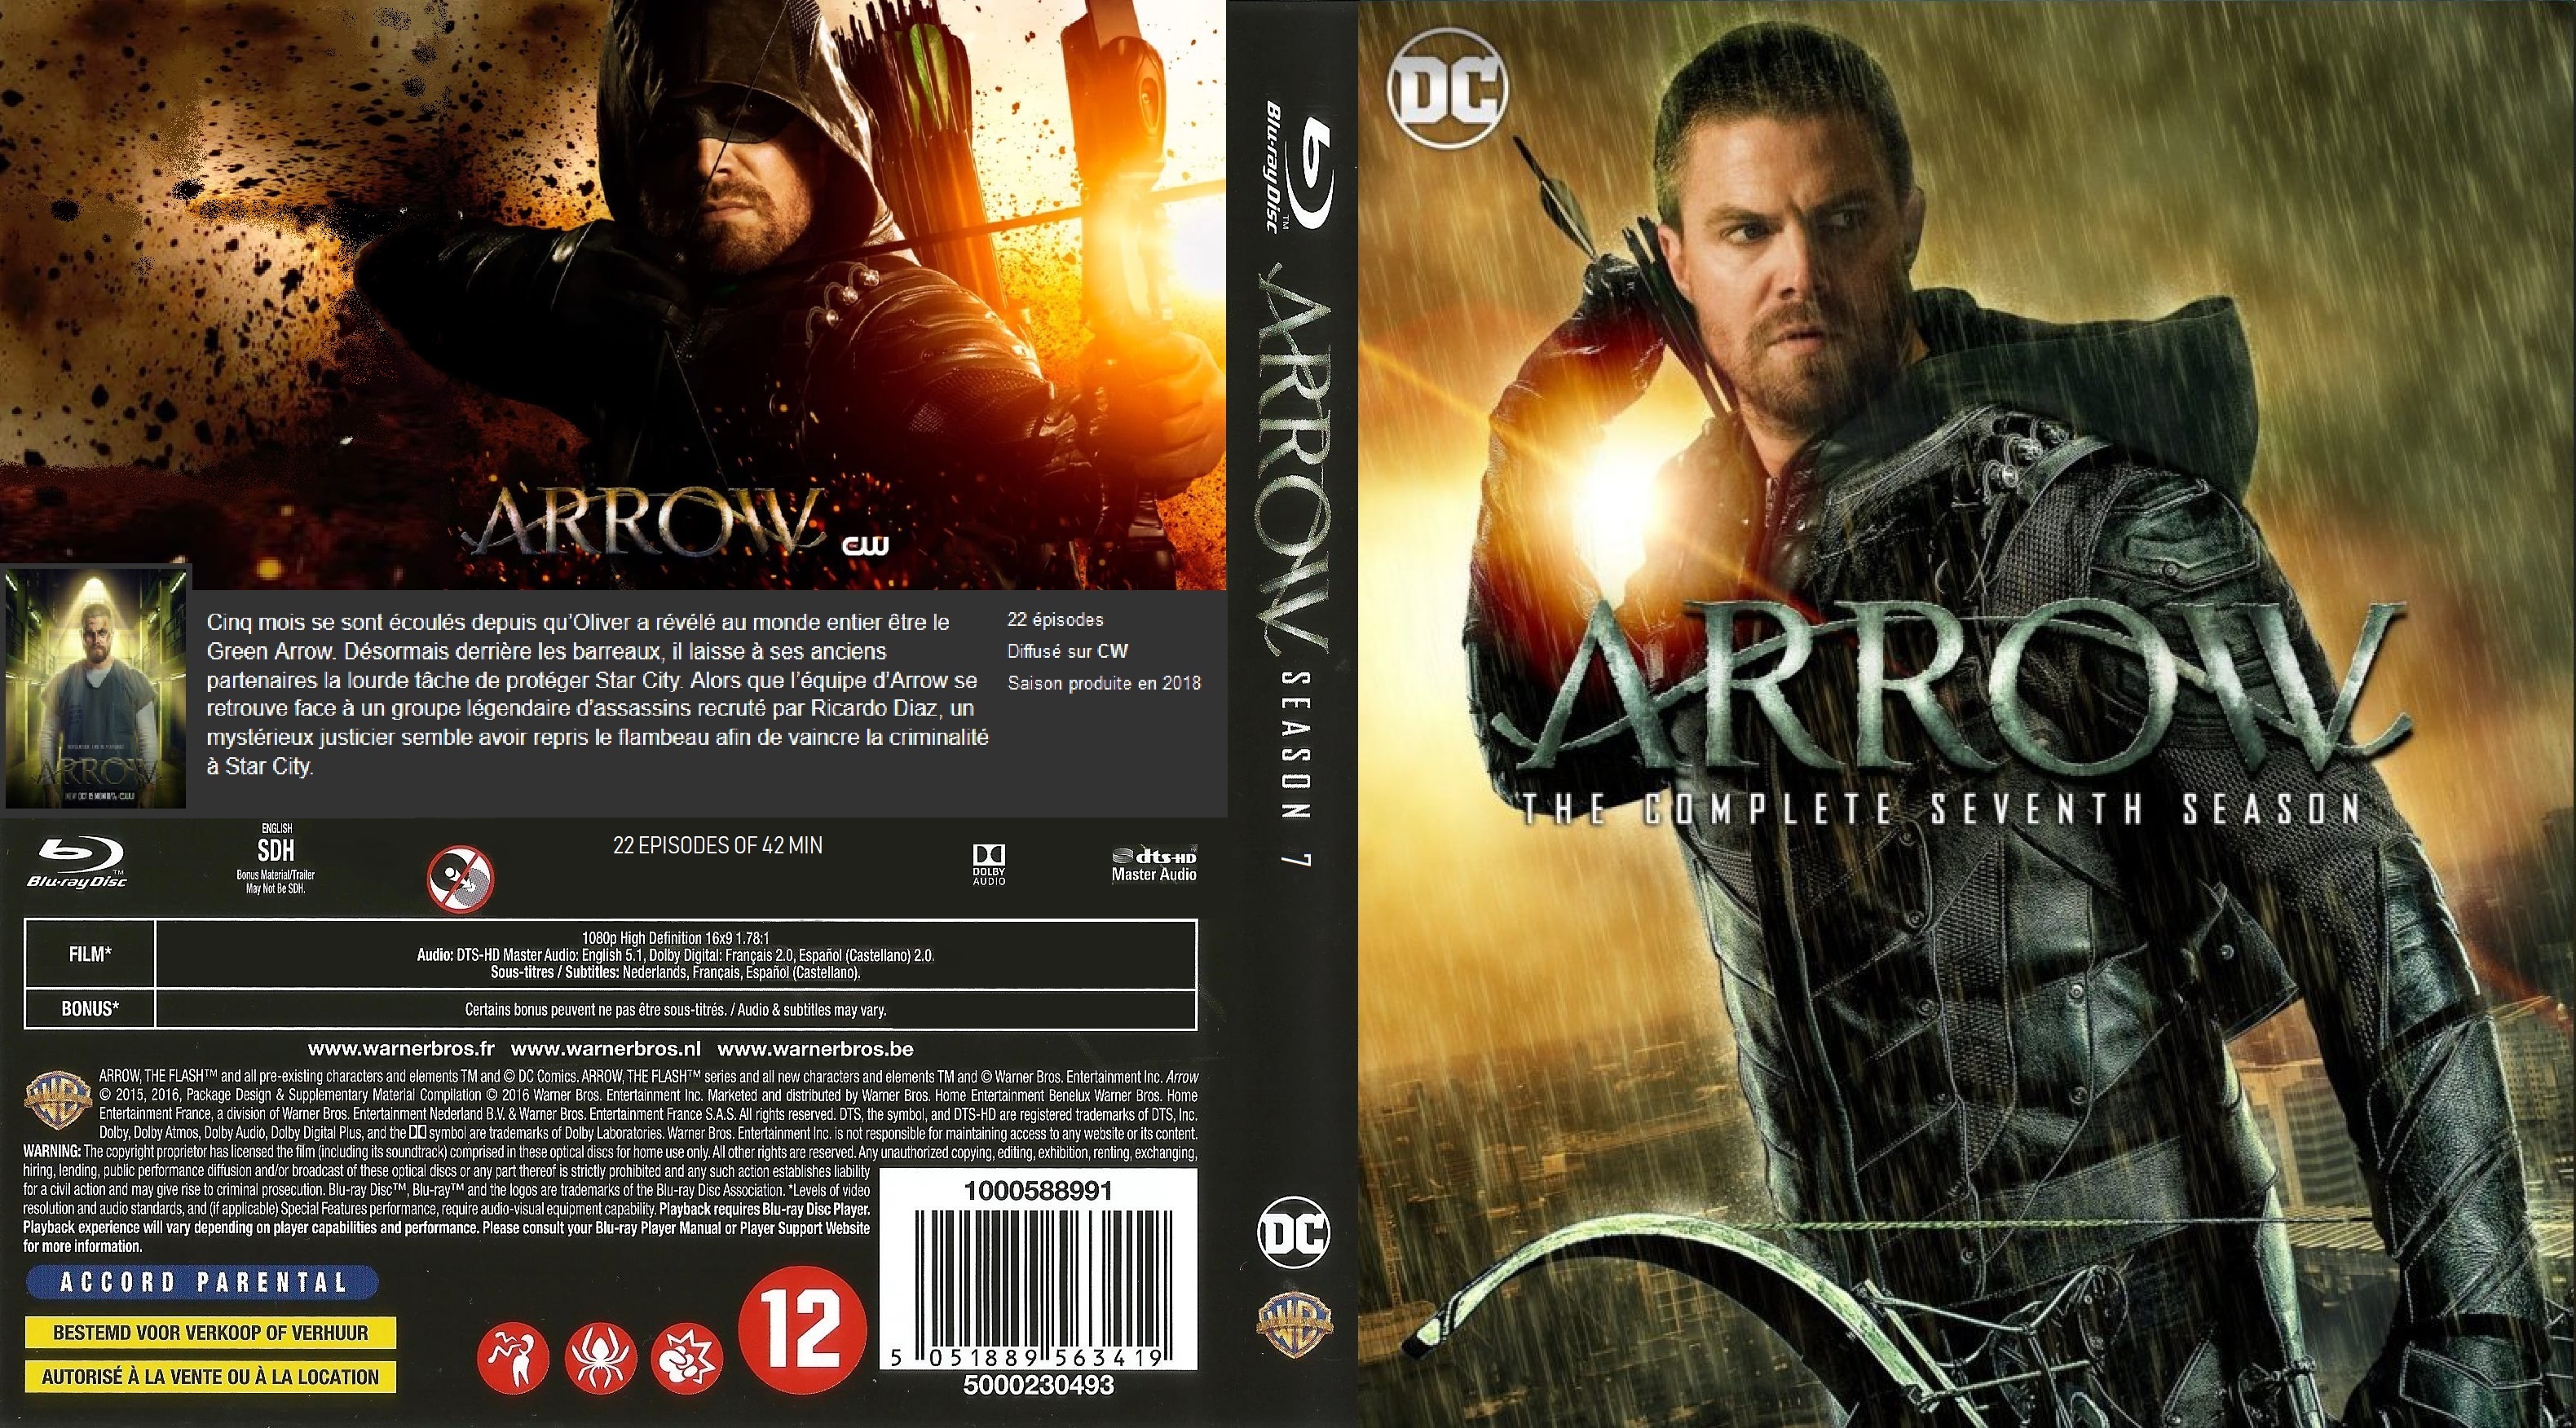 Jaquette DVD Arrow saison 7 custom (BLU-RAY) v2